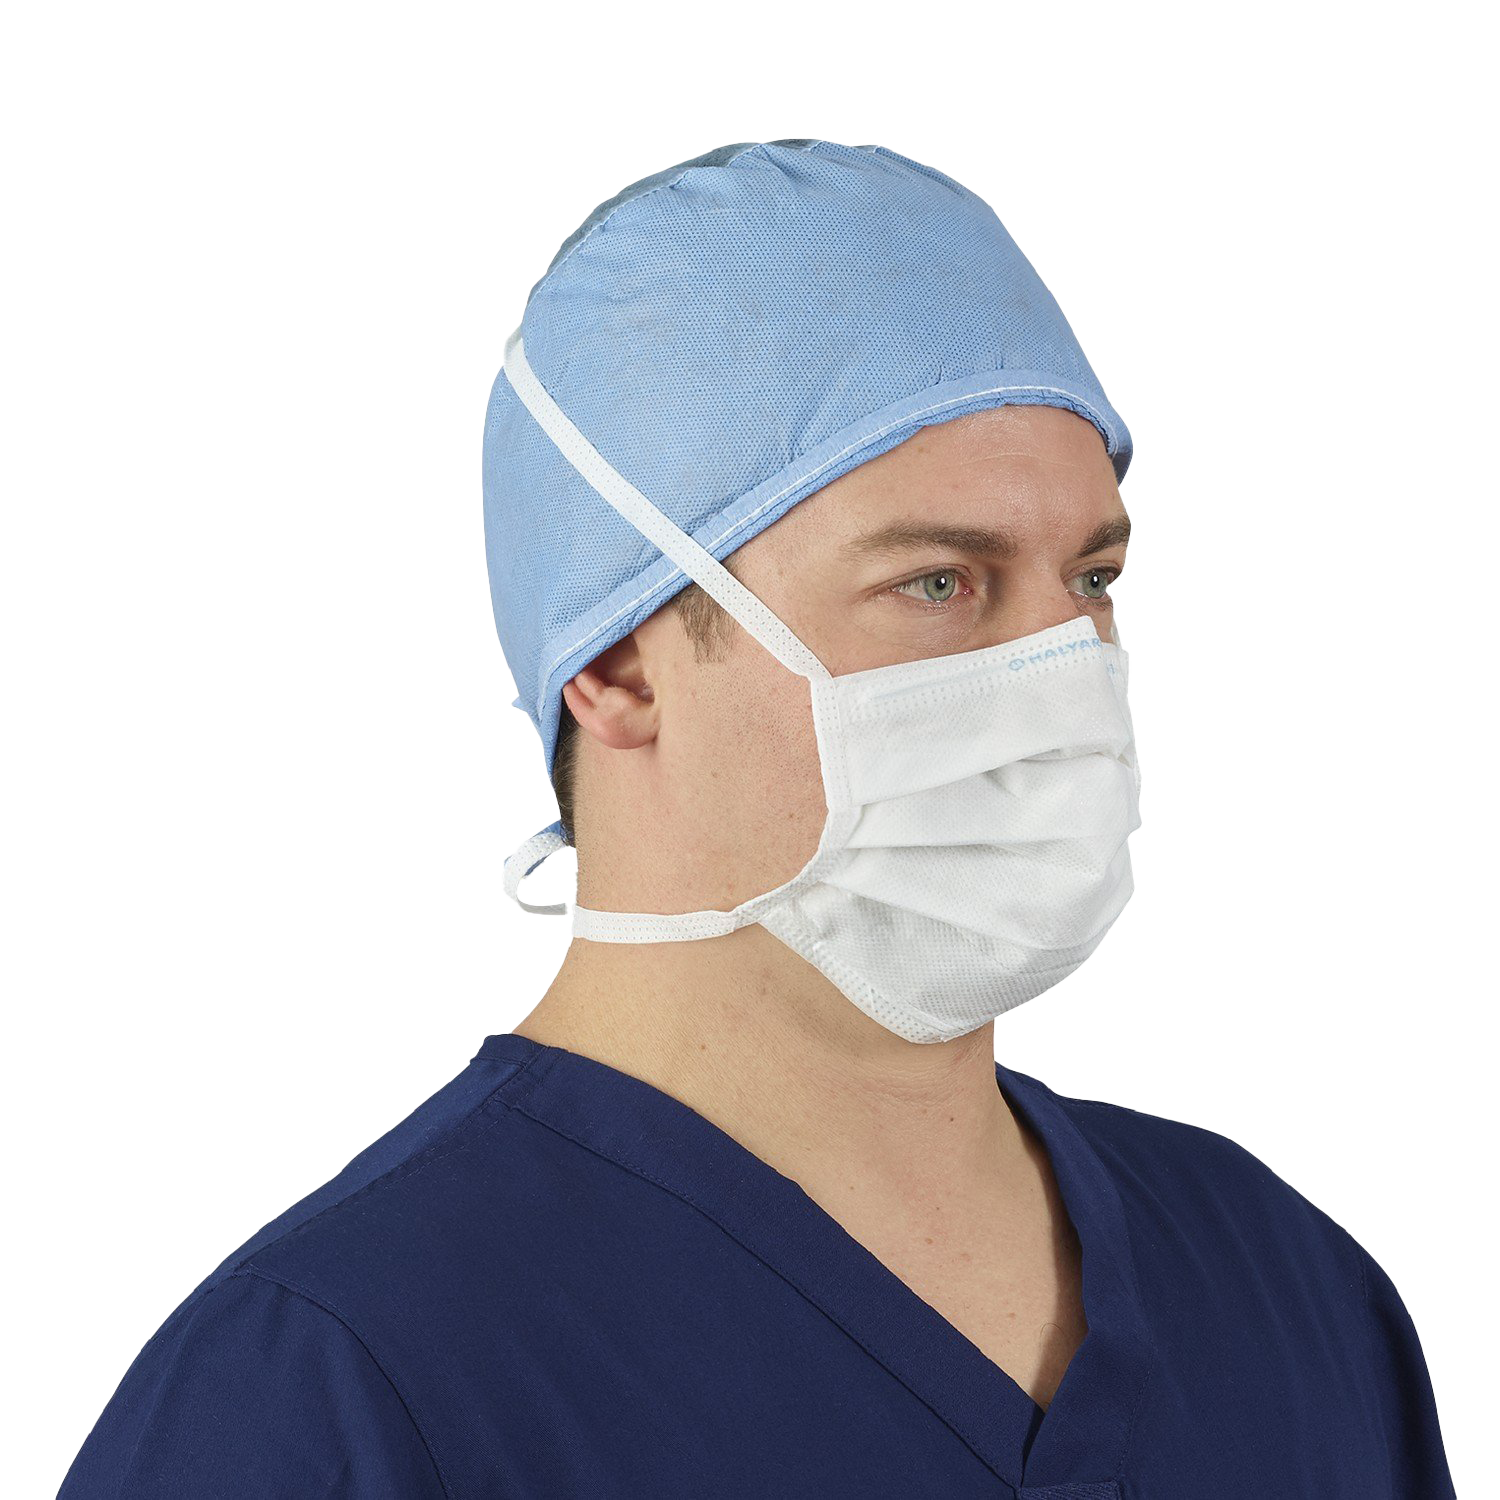 Surgical Mask PNG Transparent Image